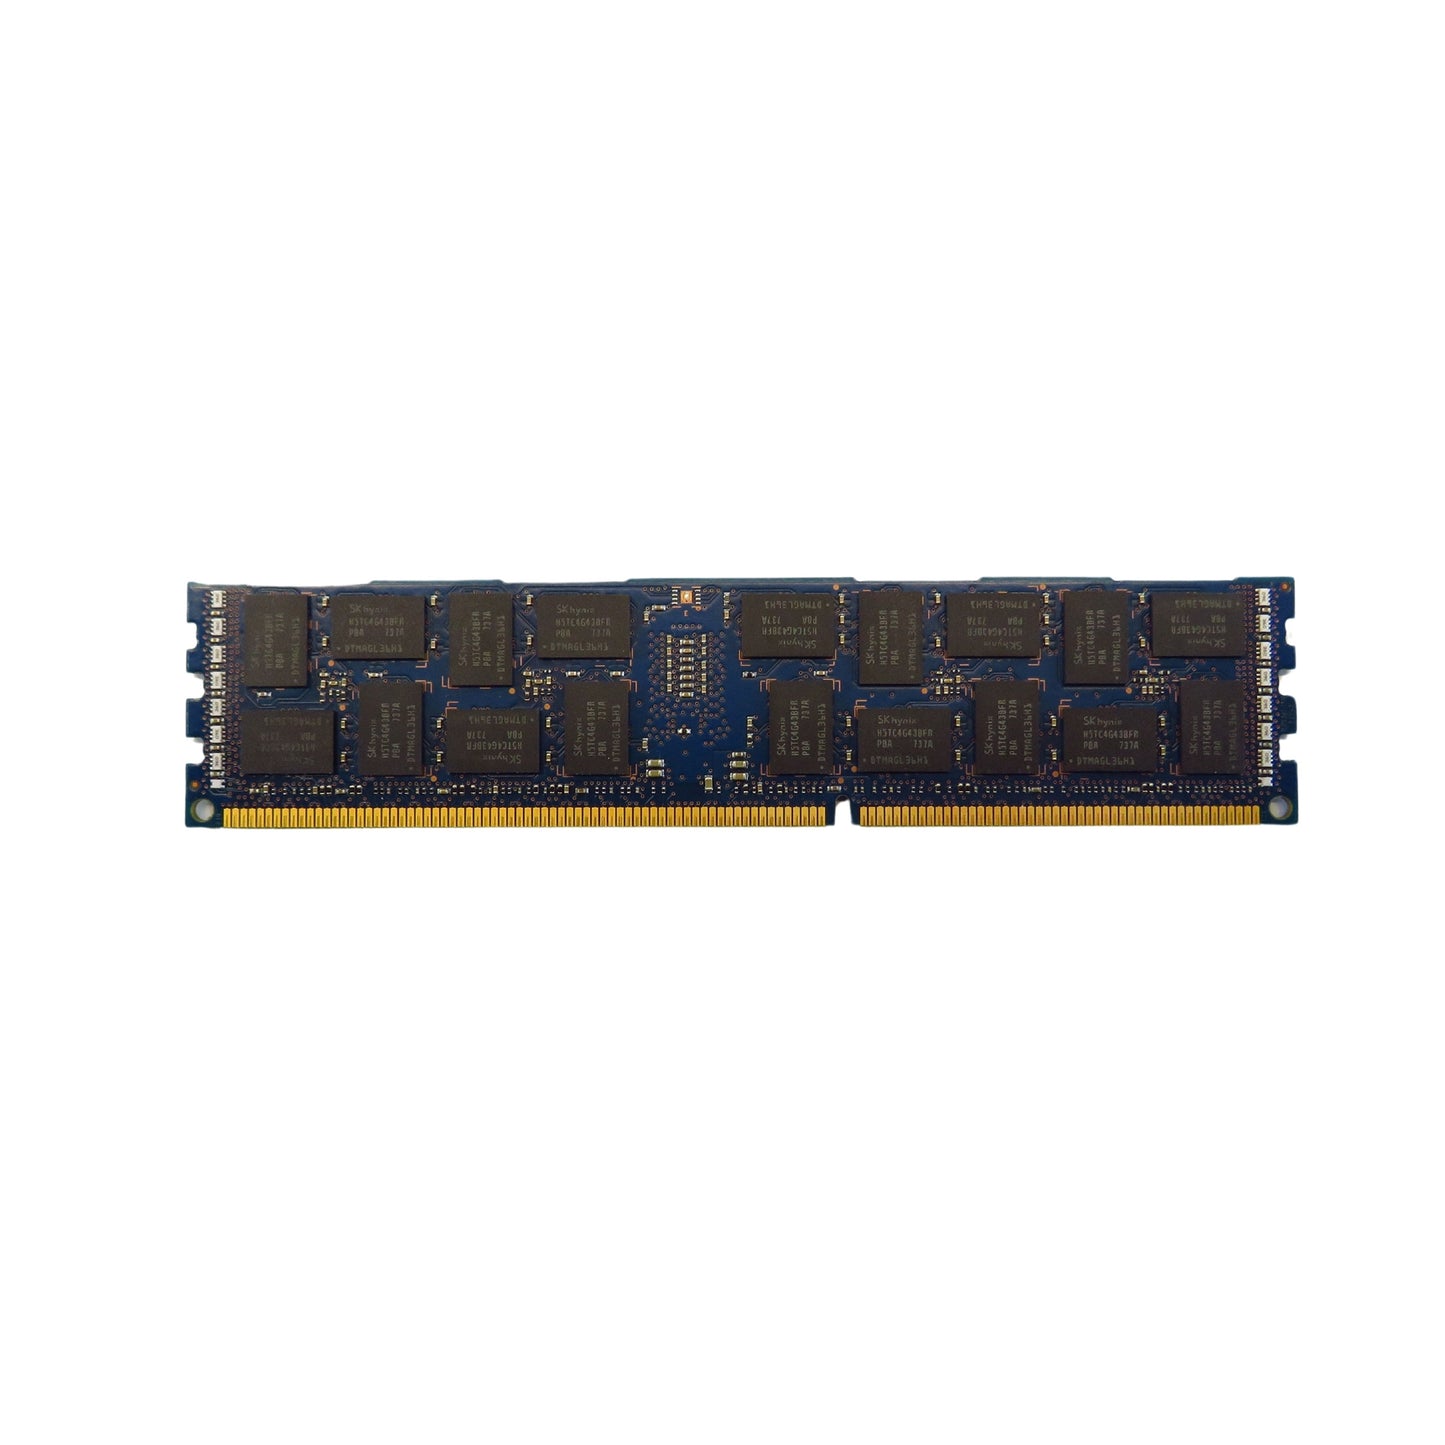 Hynix HMT42GR7BFR4A-PB 16GB 2Rx4 PC3L-12800R 1600MHz DDR3 ECC Server Memory (Refurbished)